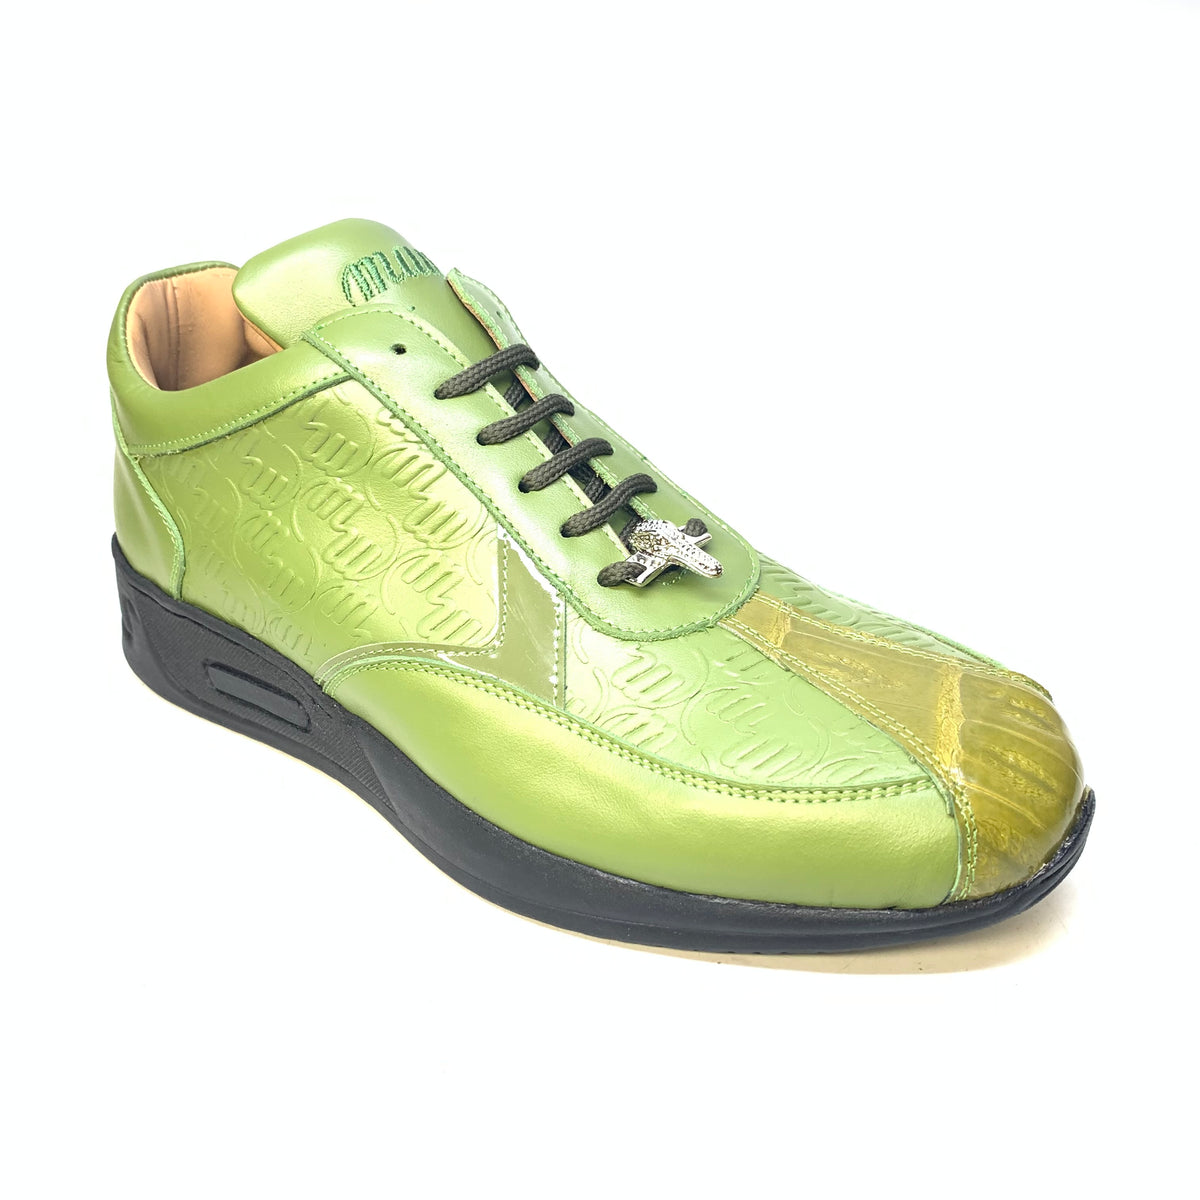 Mauri M770 Green Crocodile Nappa Leather Sneakers - Dudes Boutique